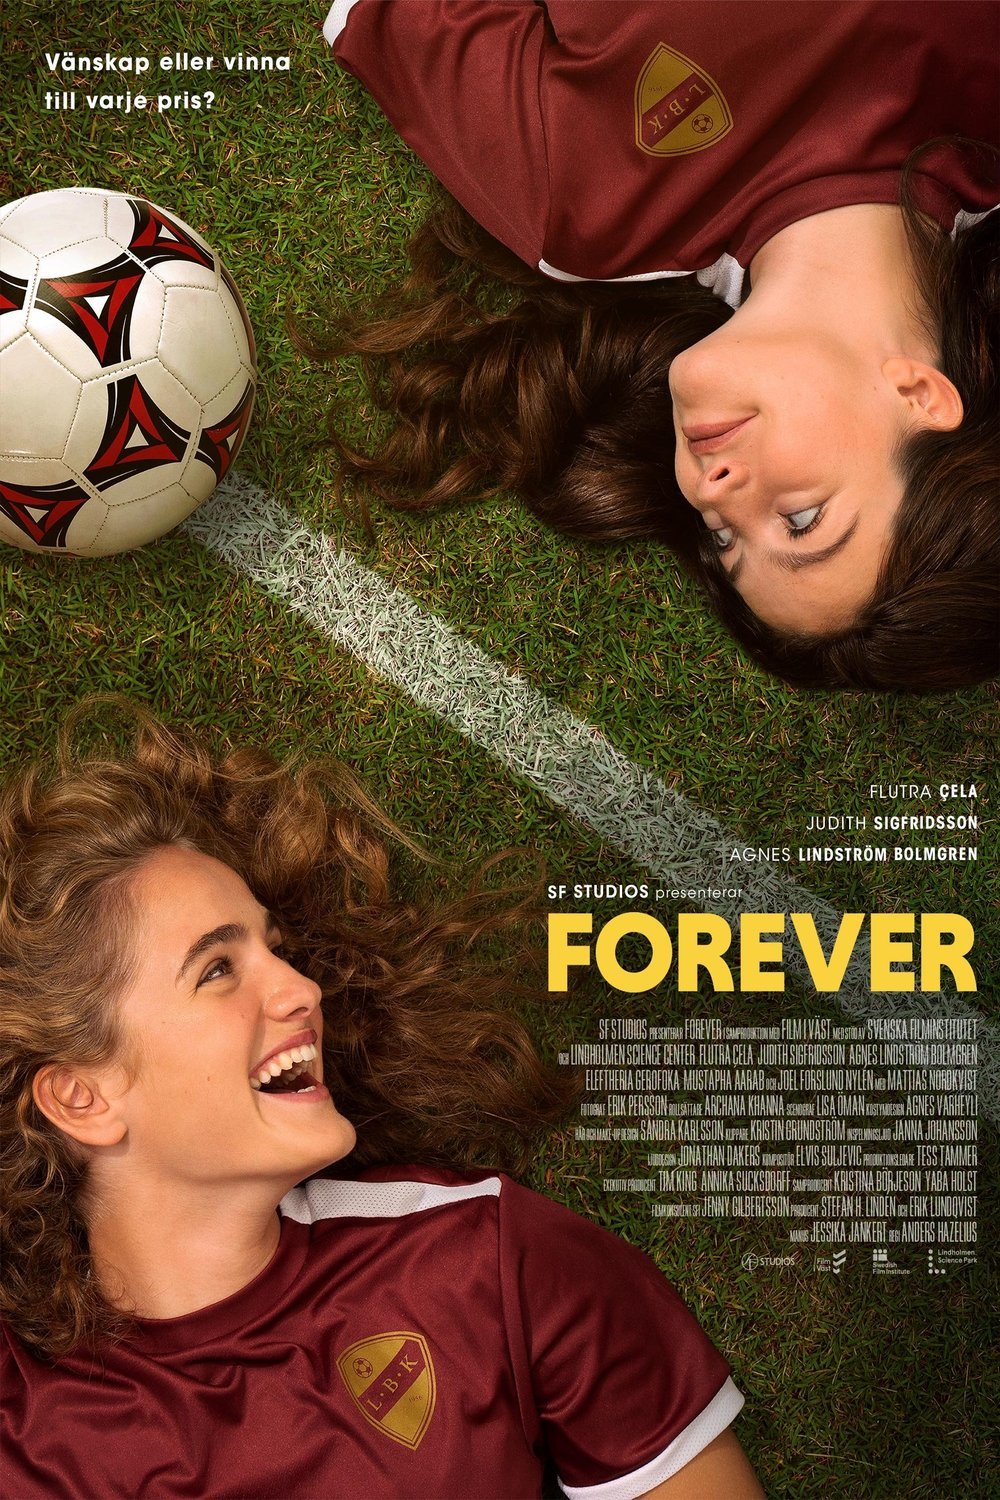 L'affiche originale du film Forever en suédois